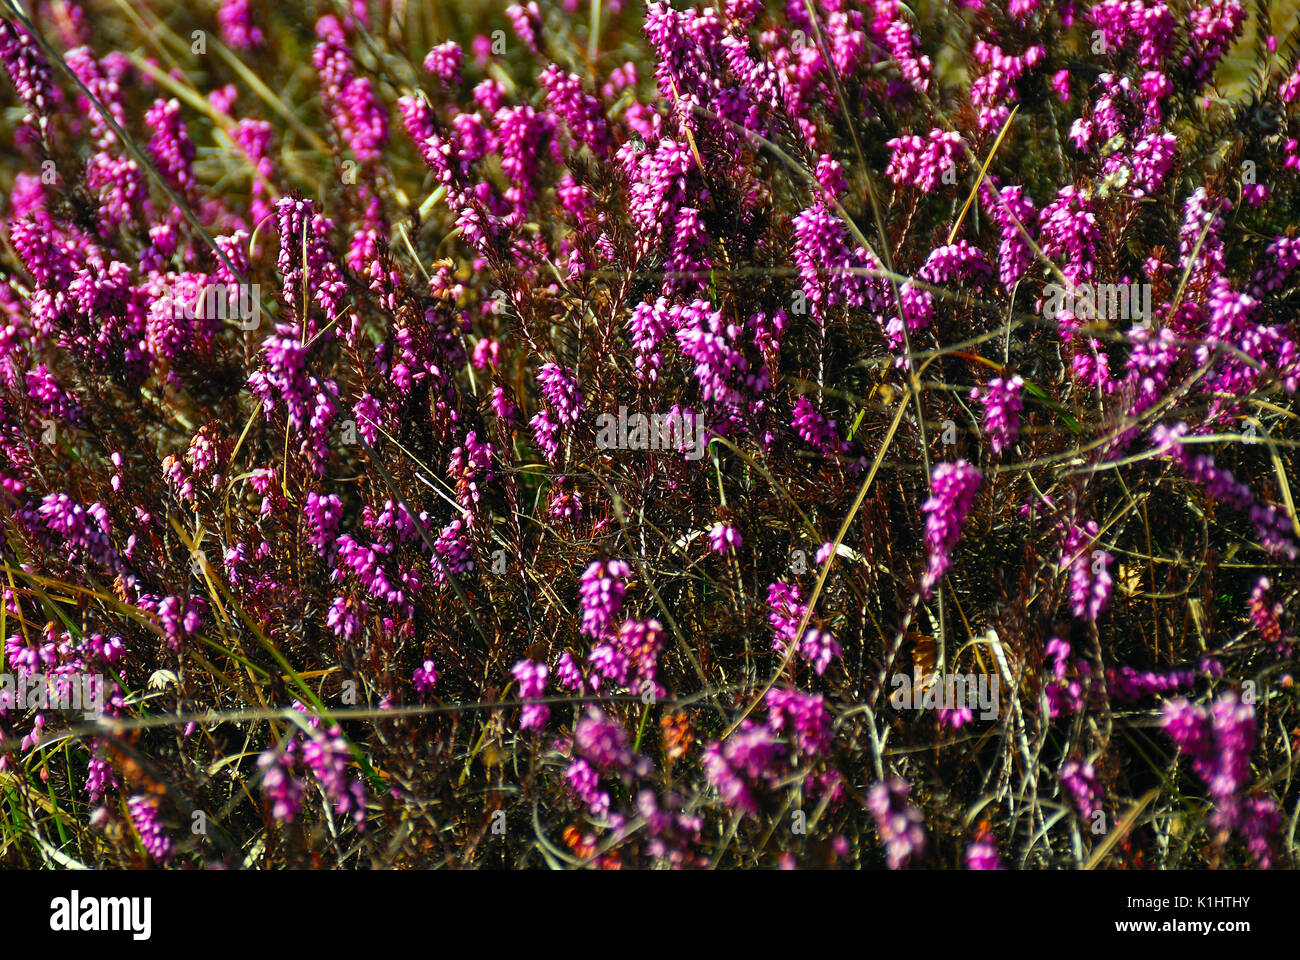 A erica bush flowering Stock Photo